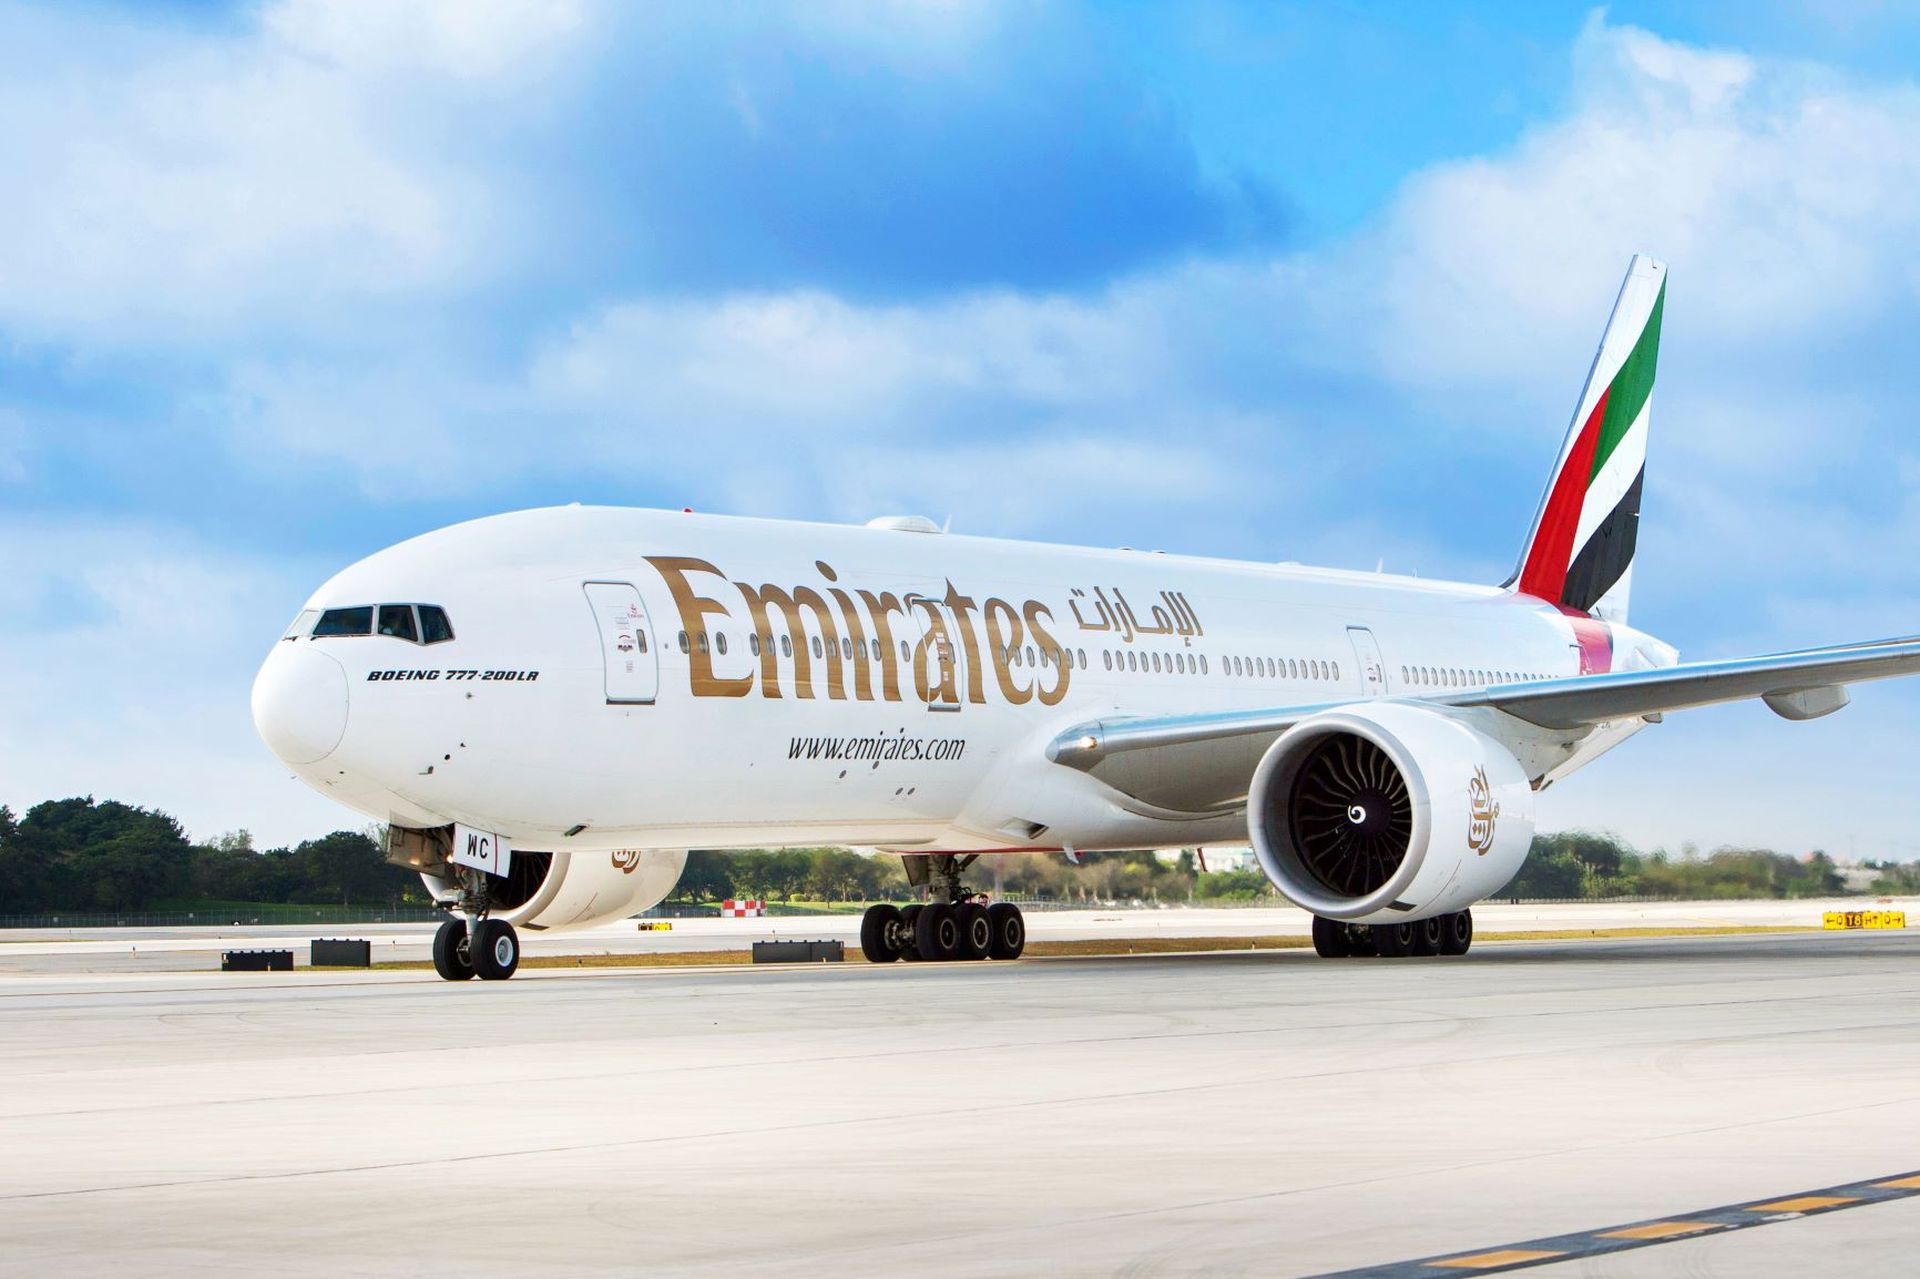 Boeing 777-200 LR společnosti Emirates. Foto: Emirates